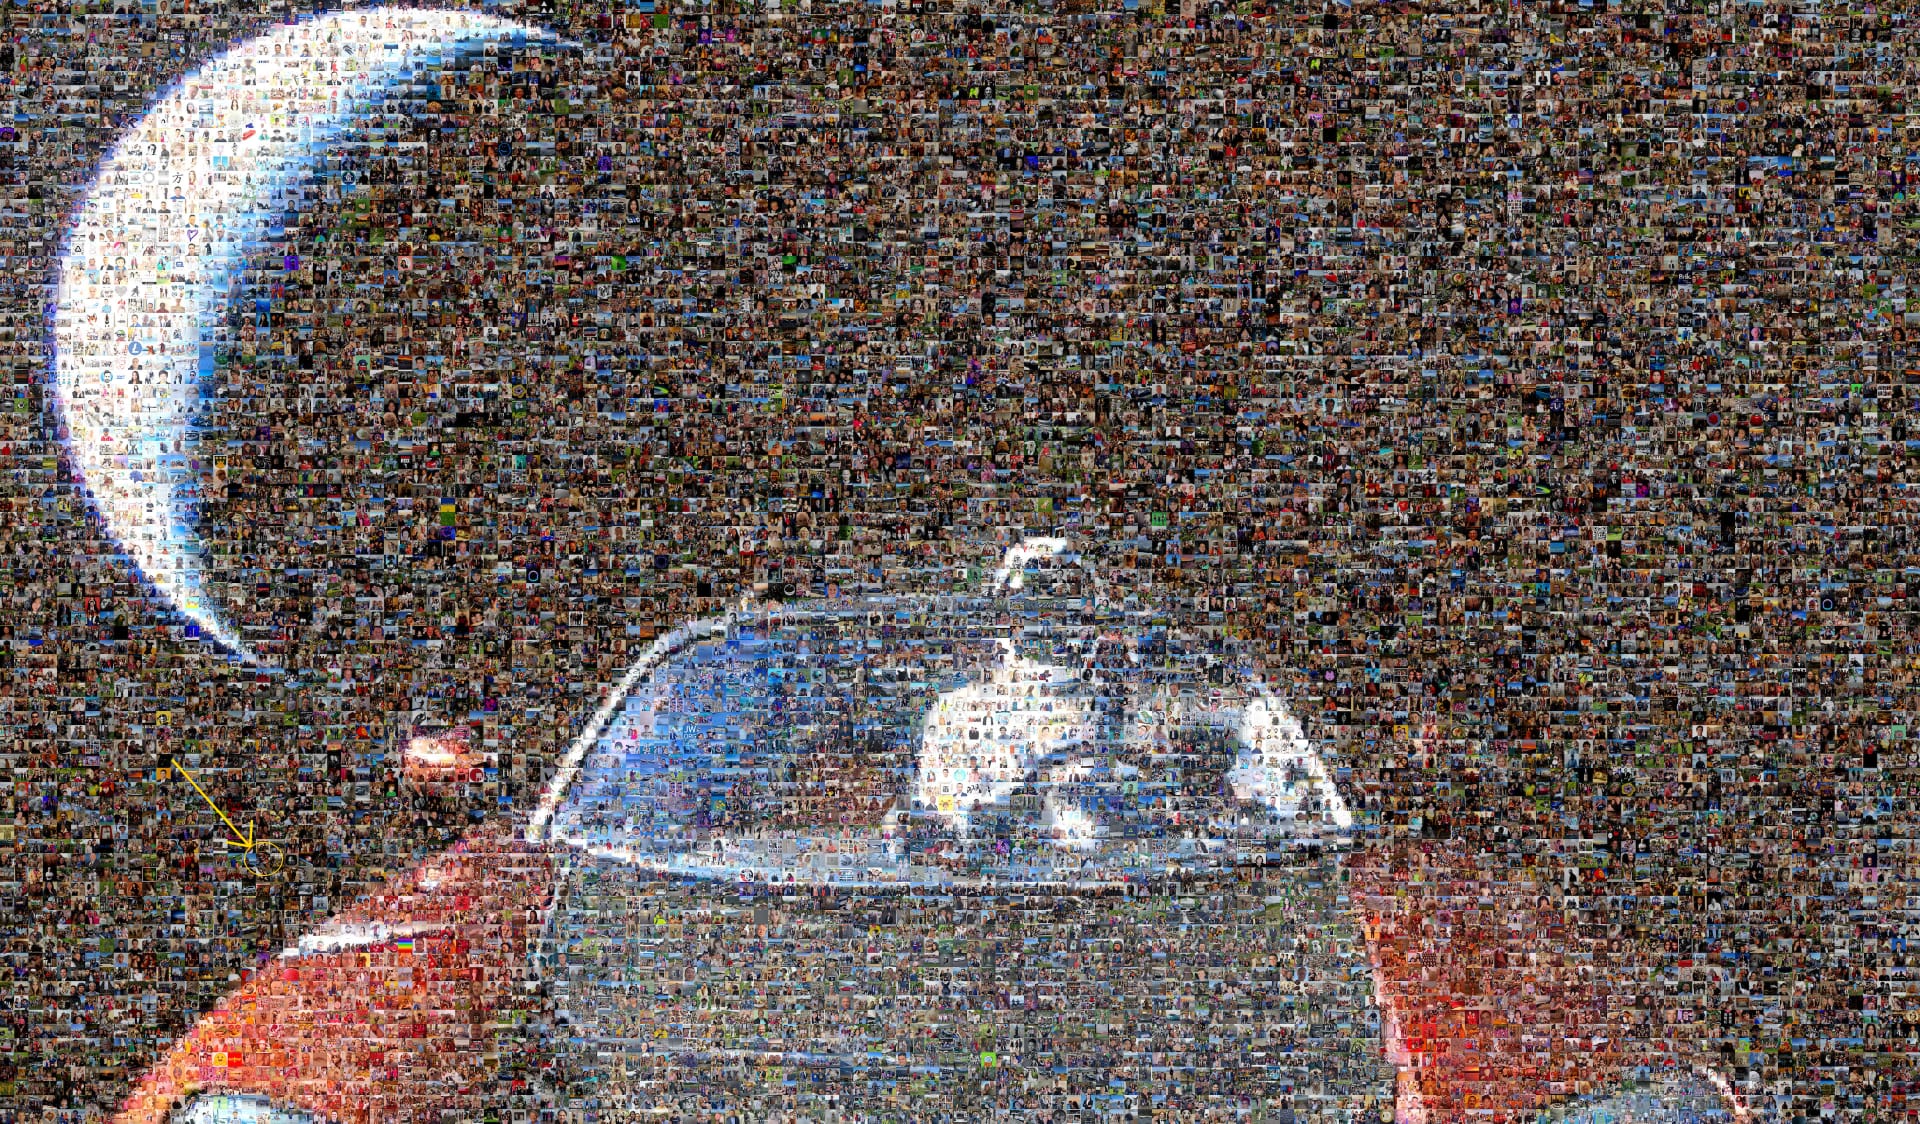 Tesla Mosaic in Space